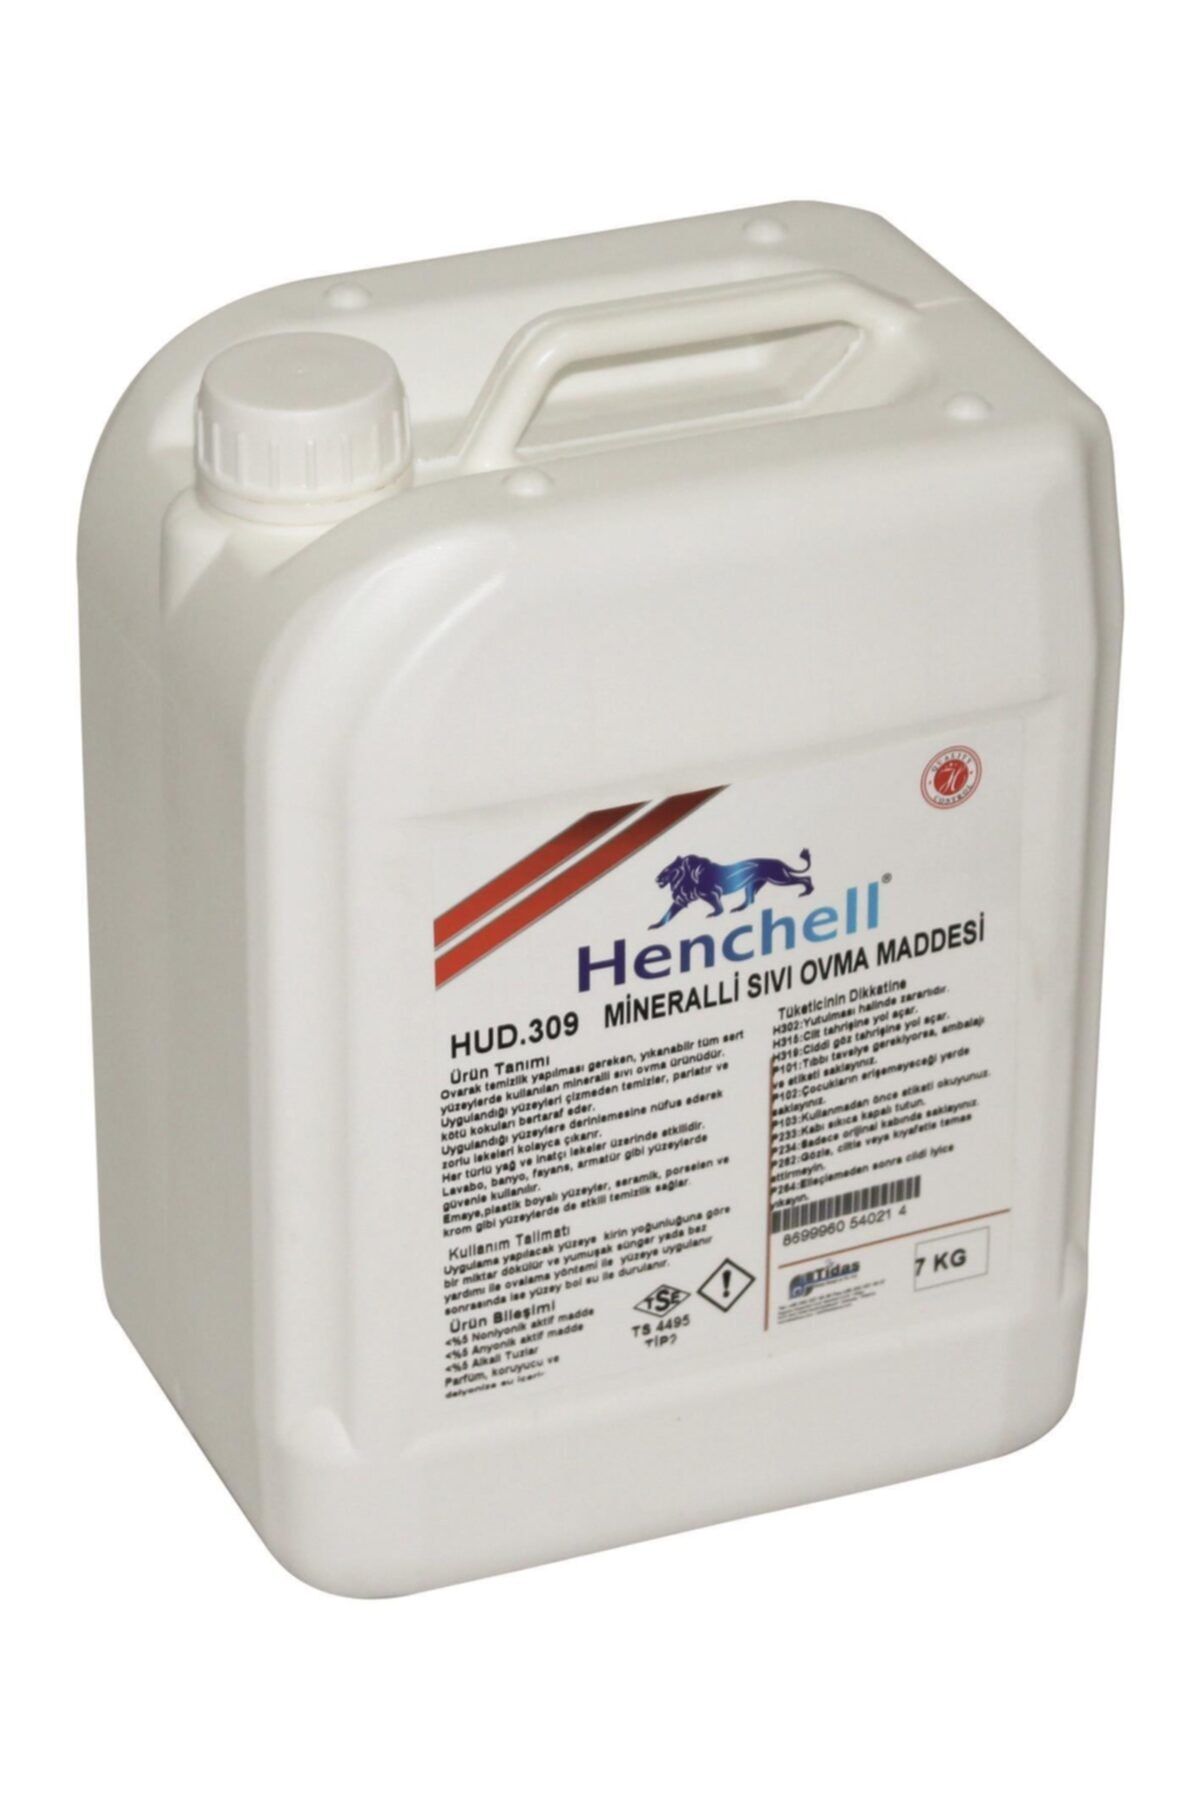 Henchell Mineralli Sıvı Ovma Maddesi 7kg